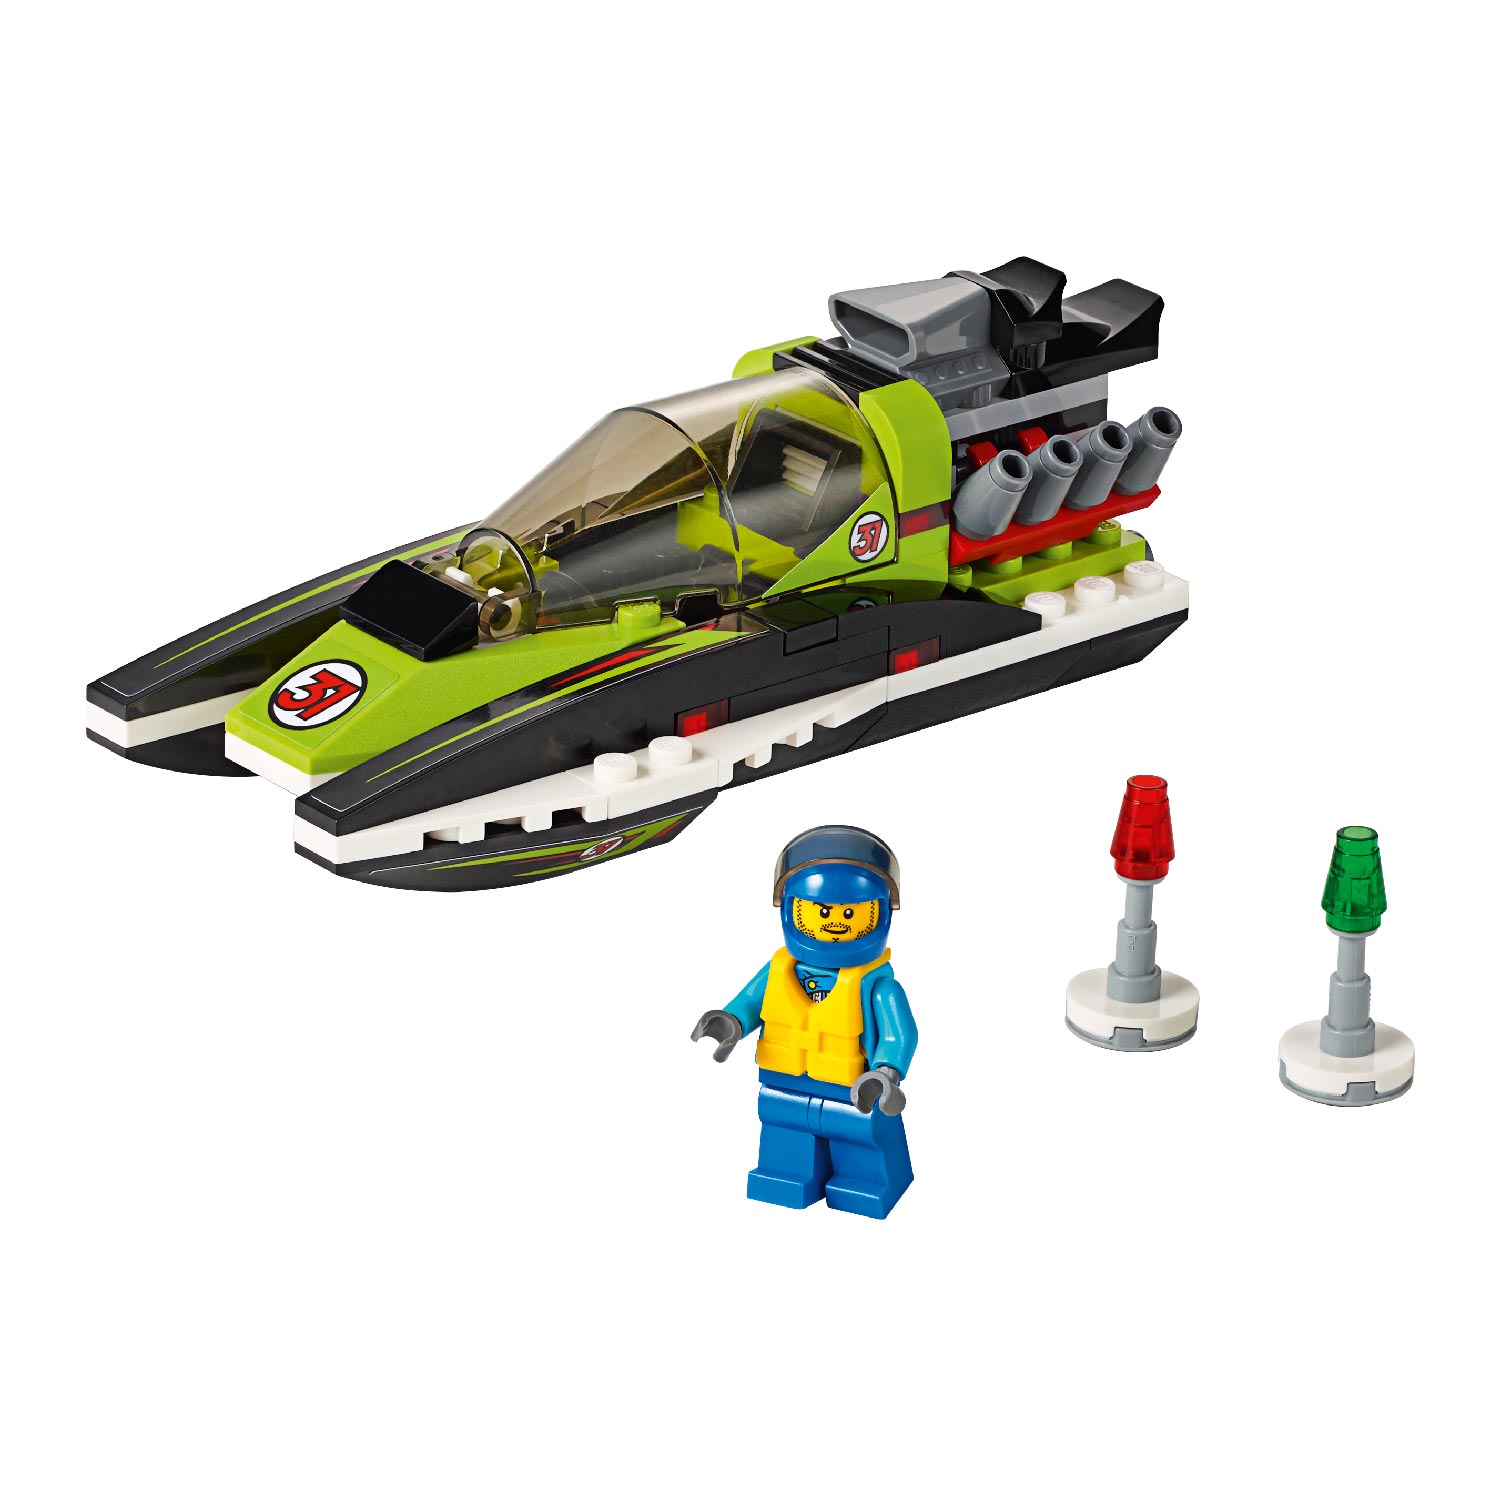 LEGO City 60114 Raceboot